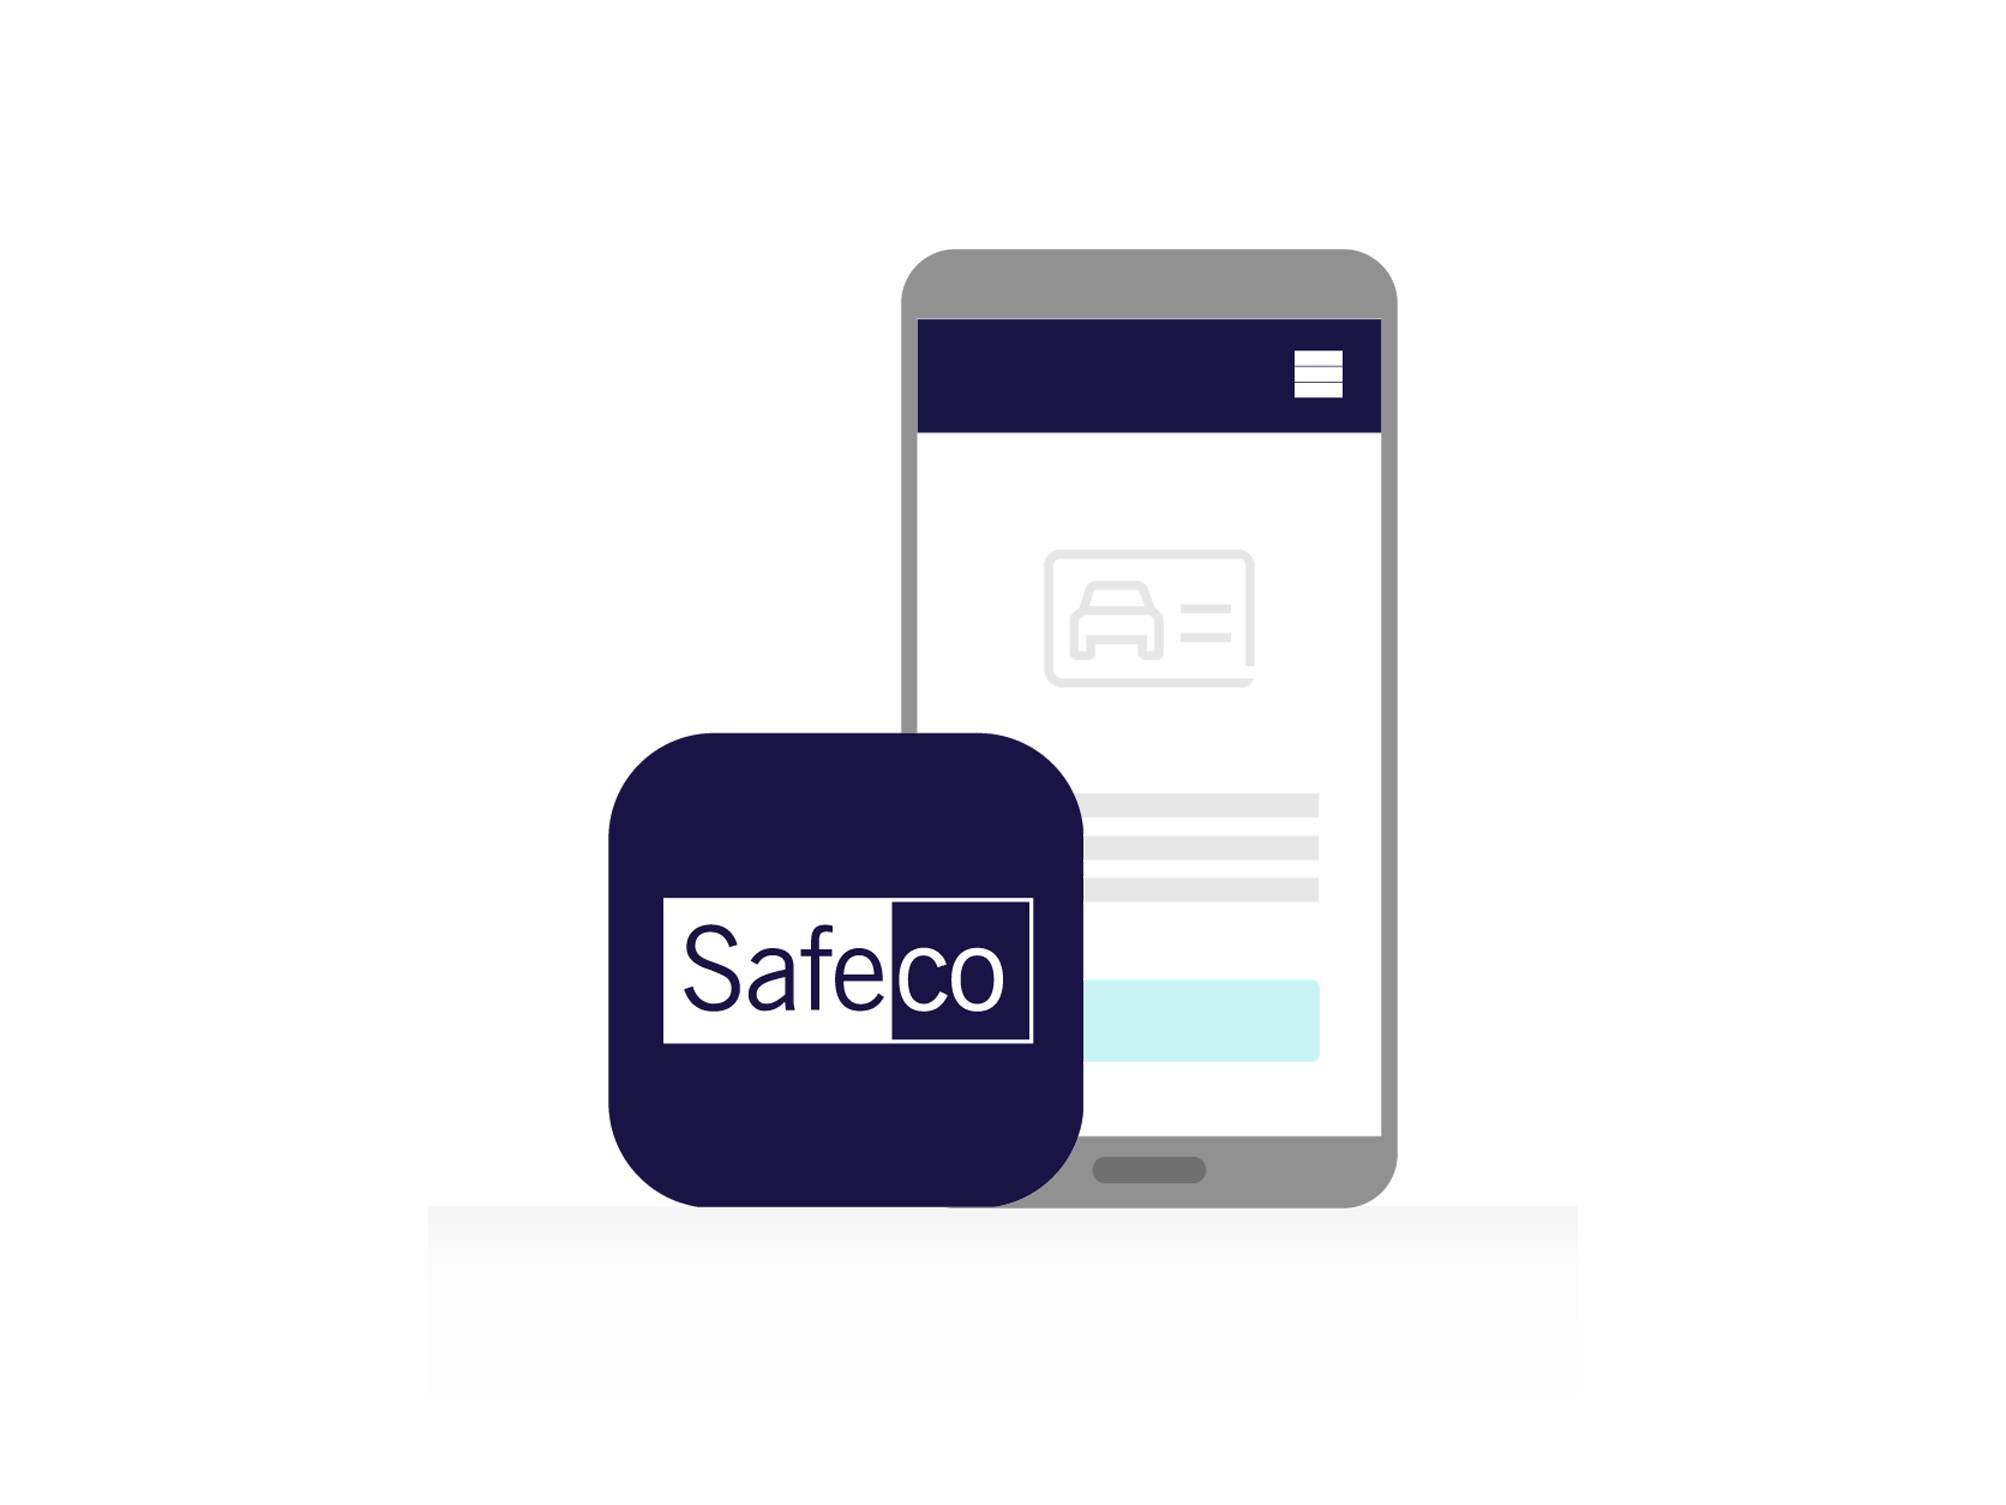 Safeco mobile app